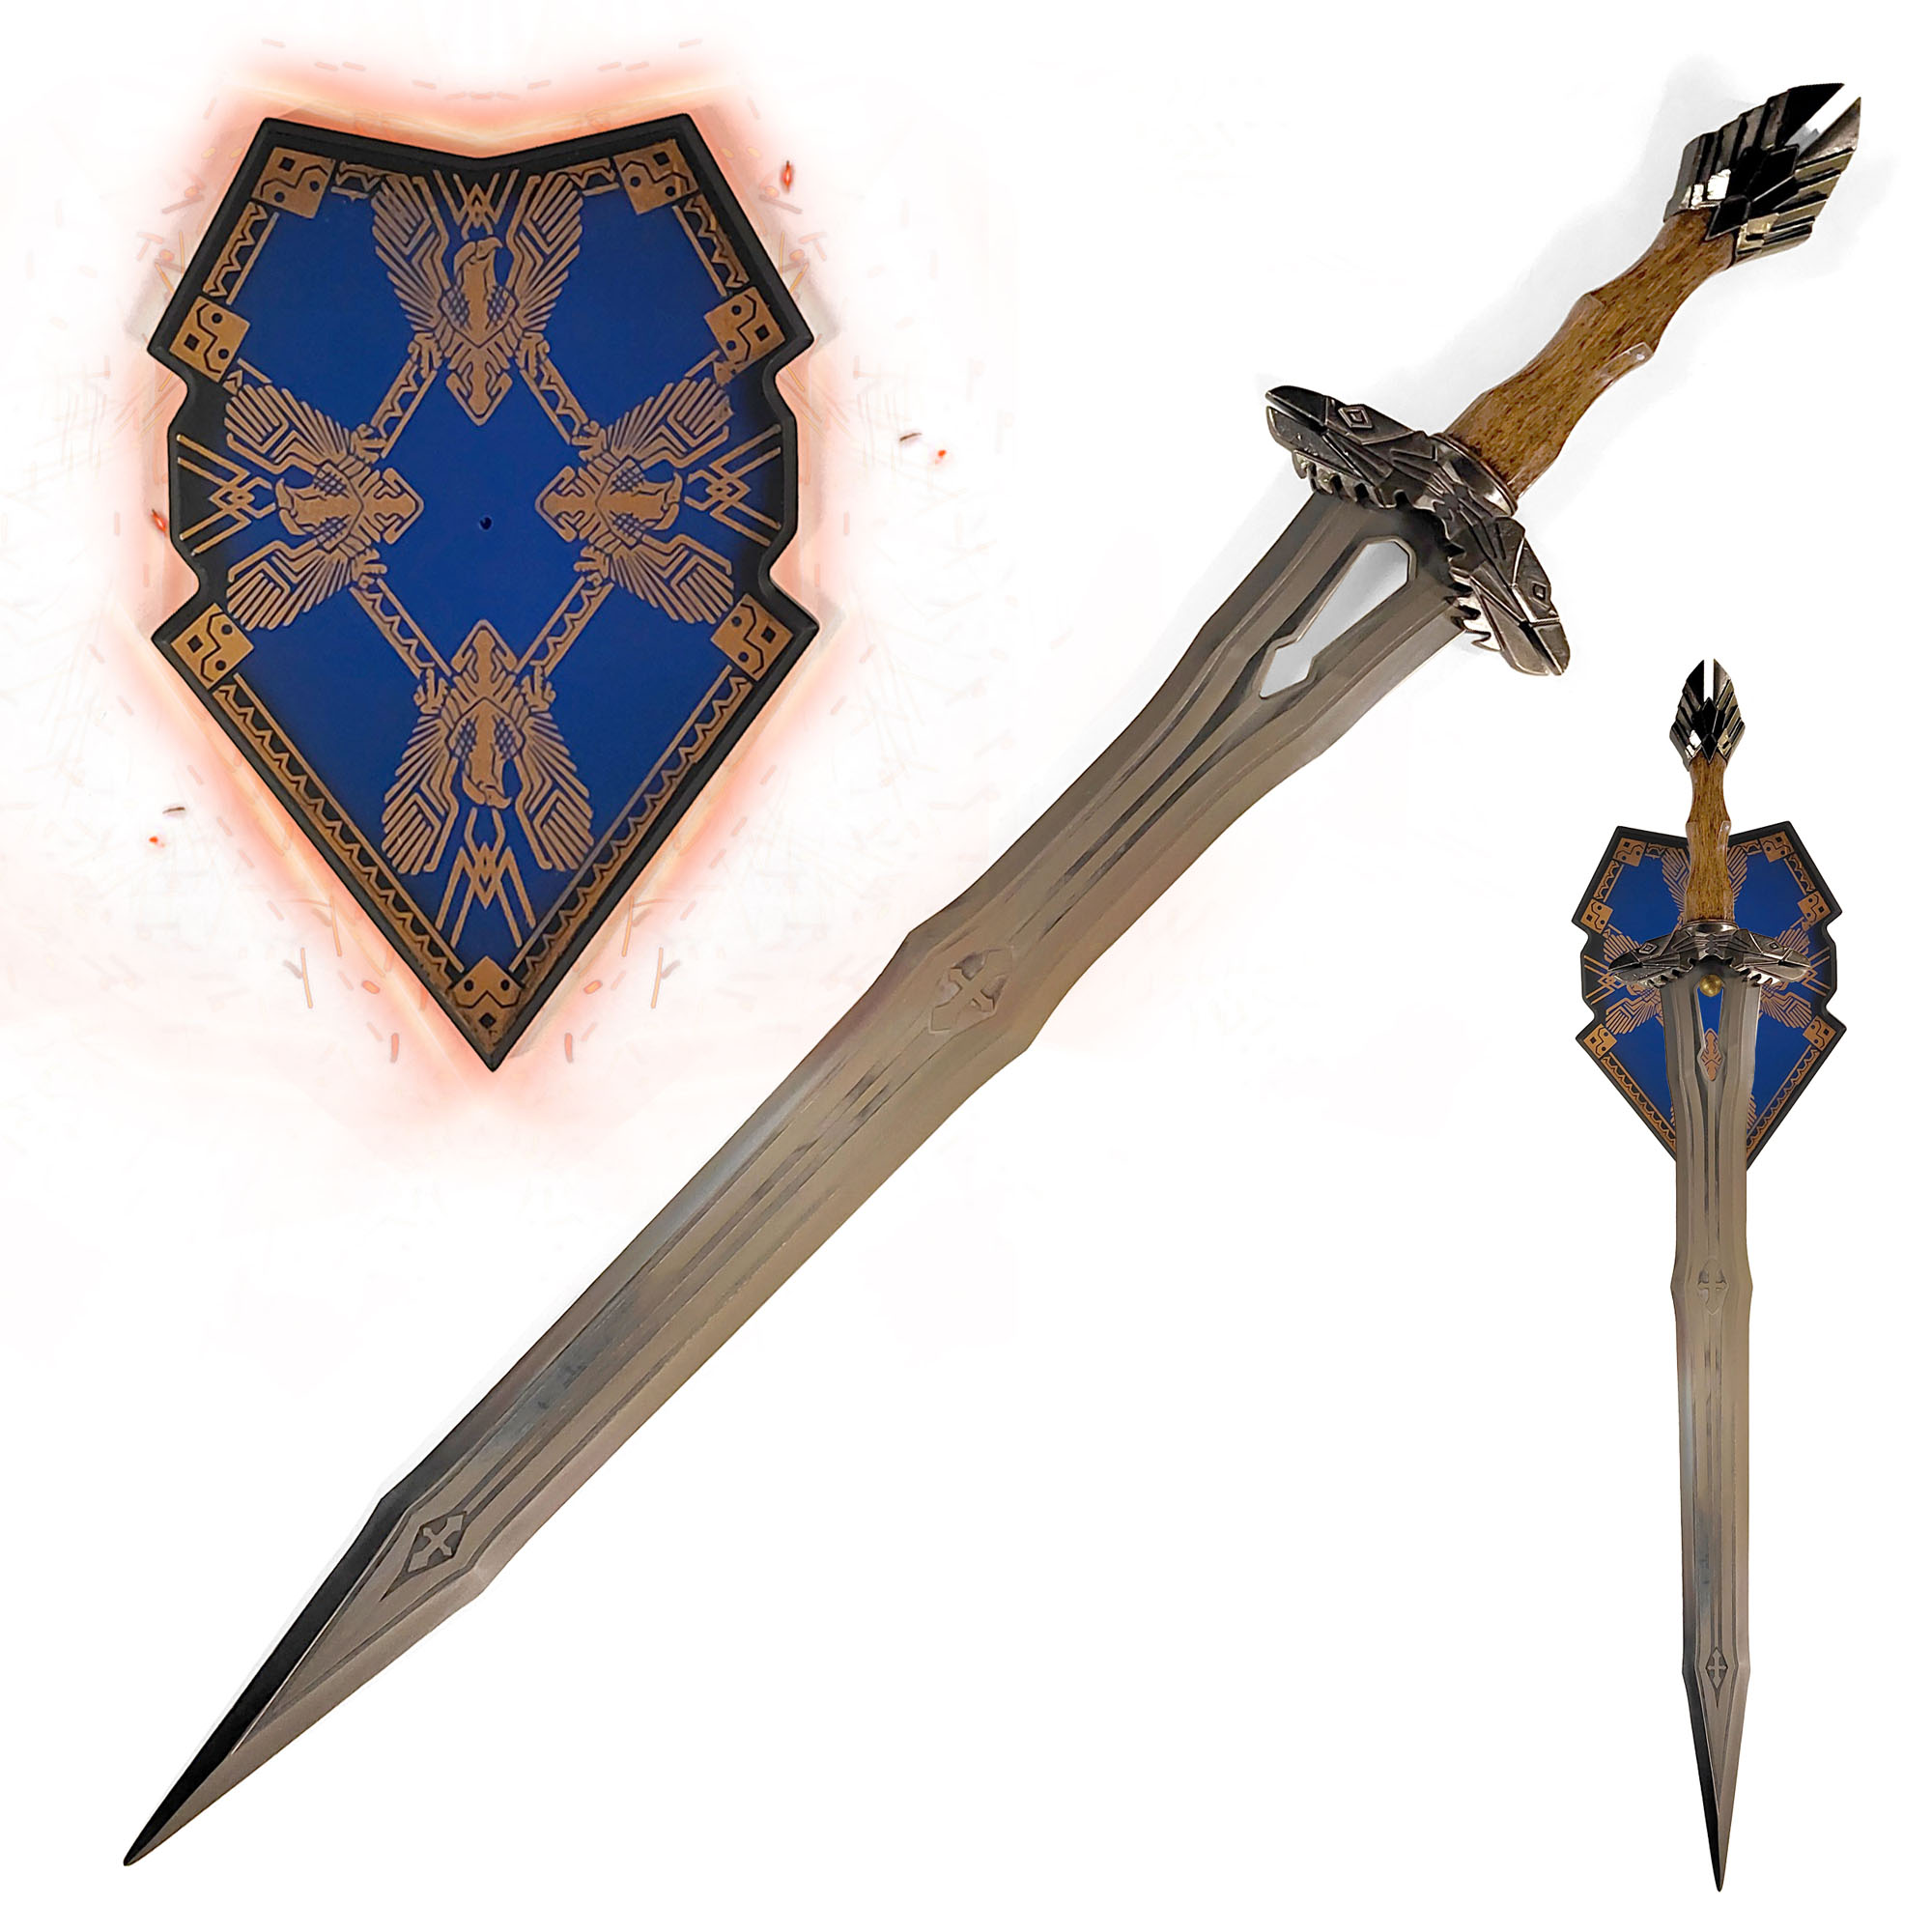 The Hobbit - Thorin Oakenshield - Regal Sword